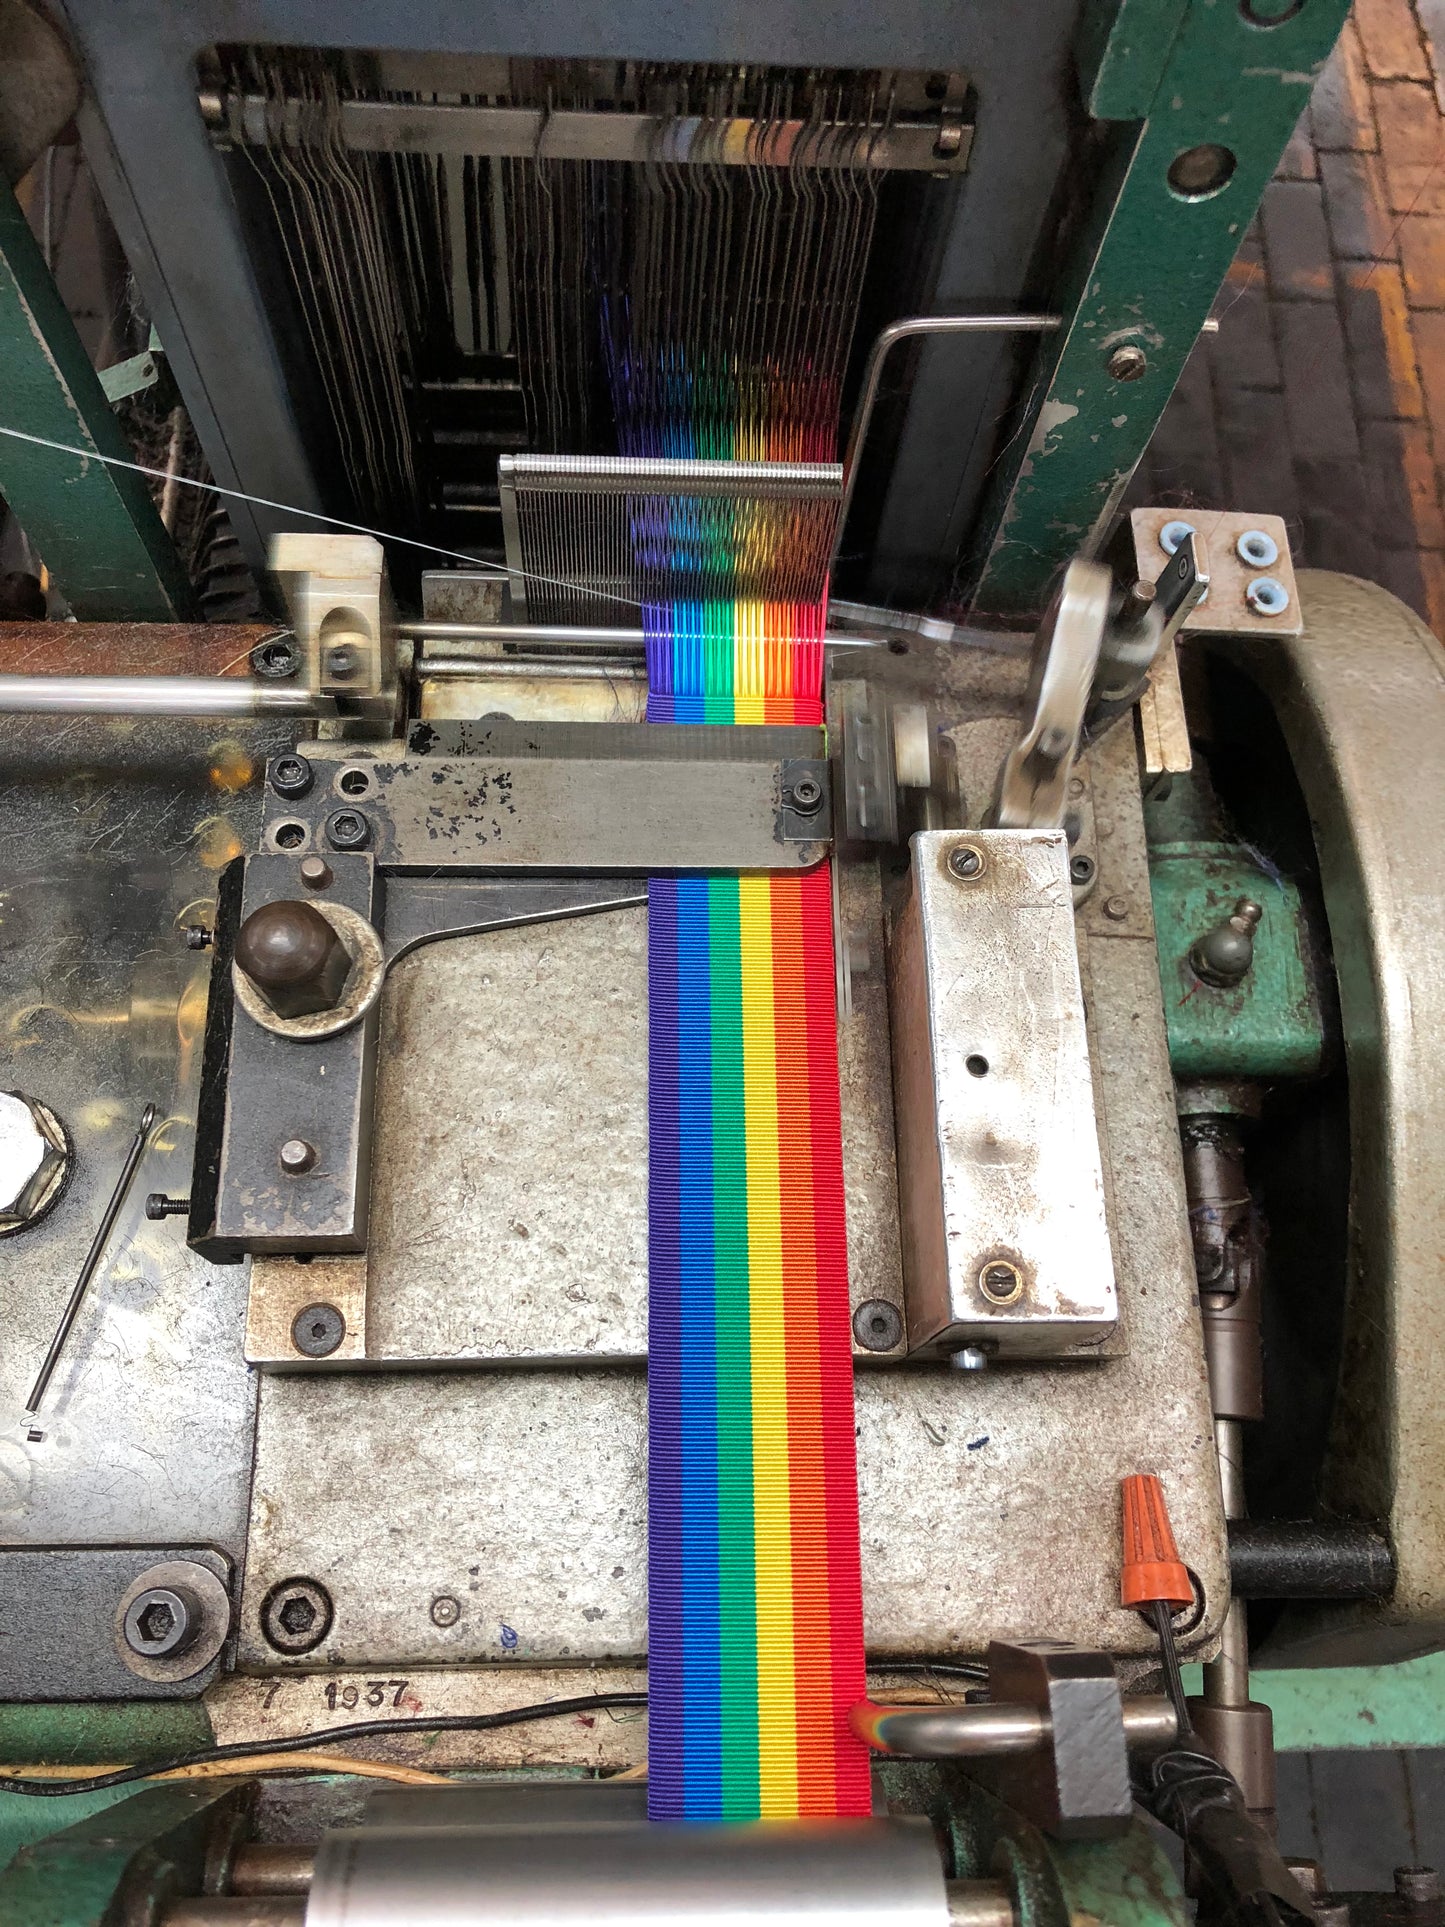 "Rainbow Pride" 1" Grosgrain Ribbon